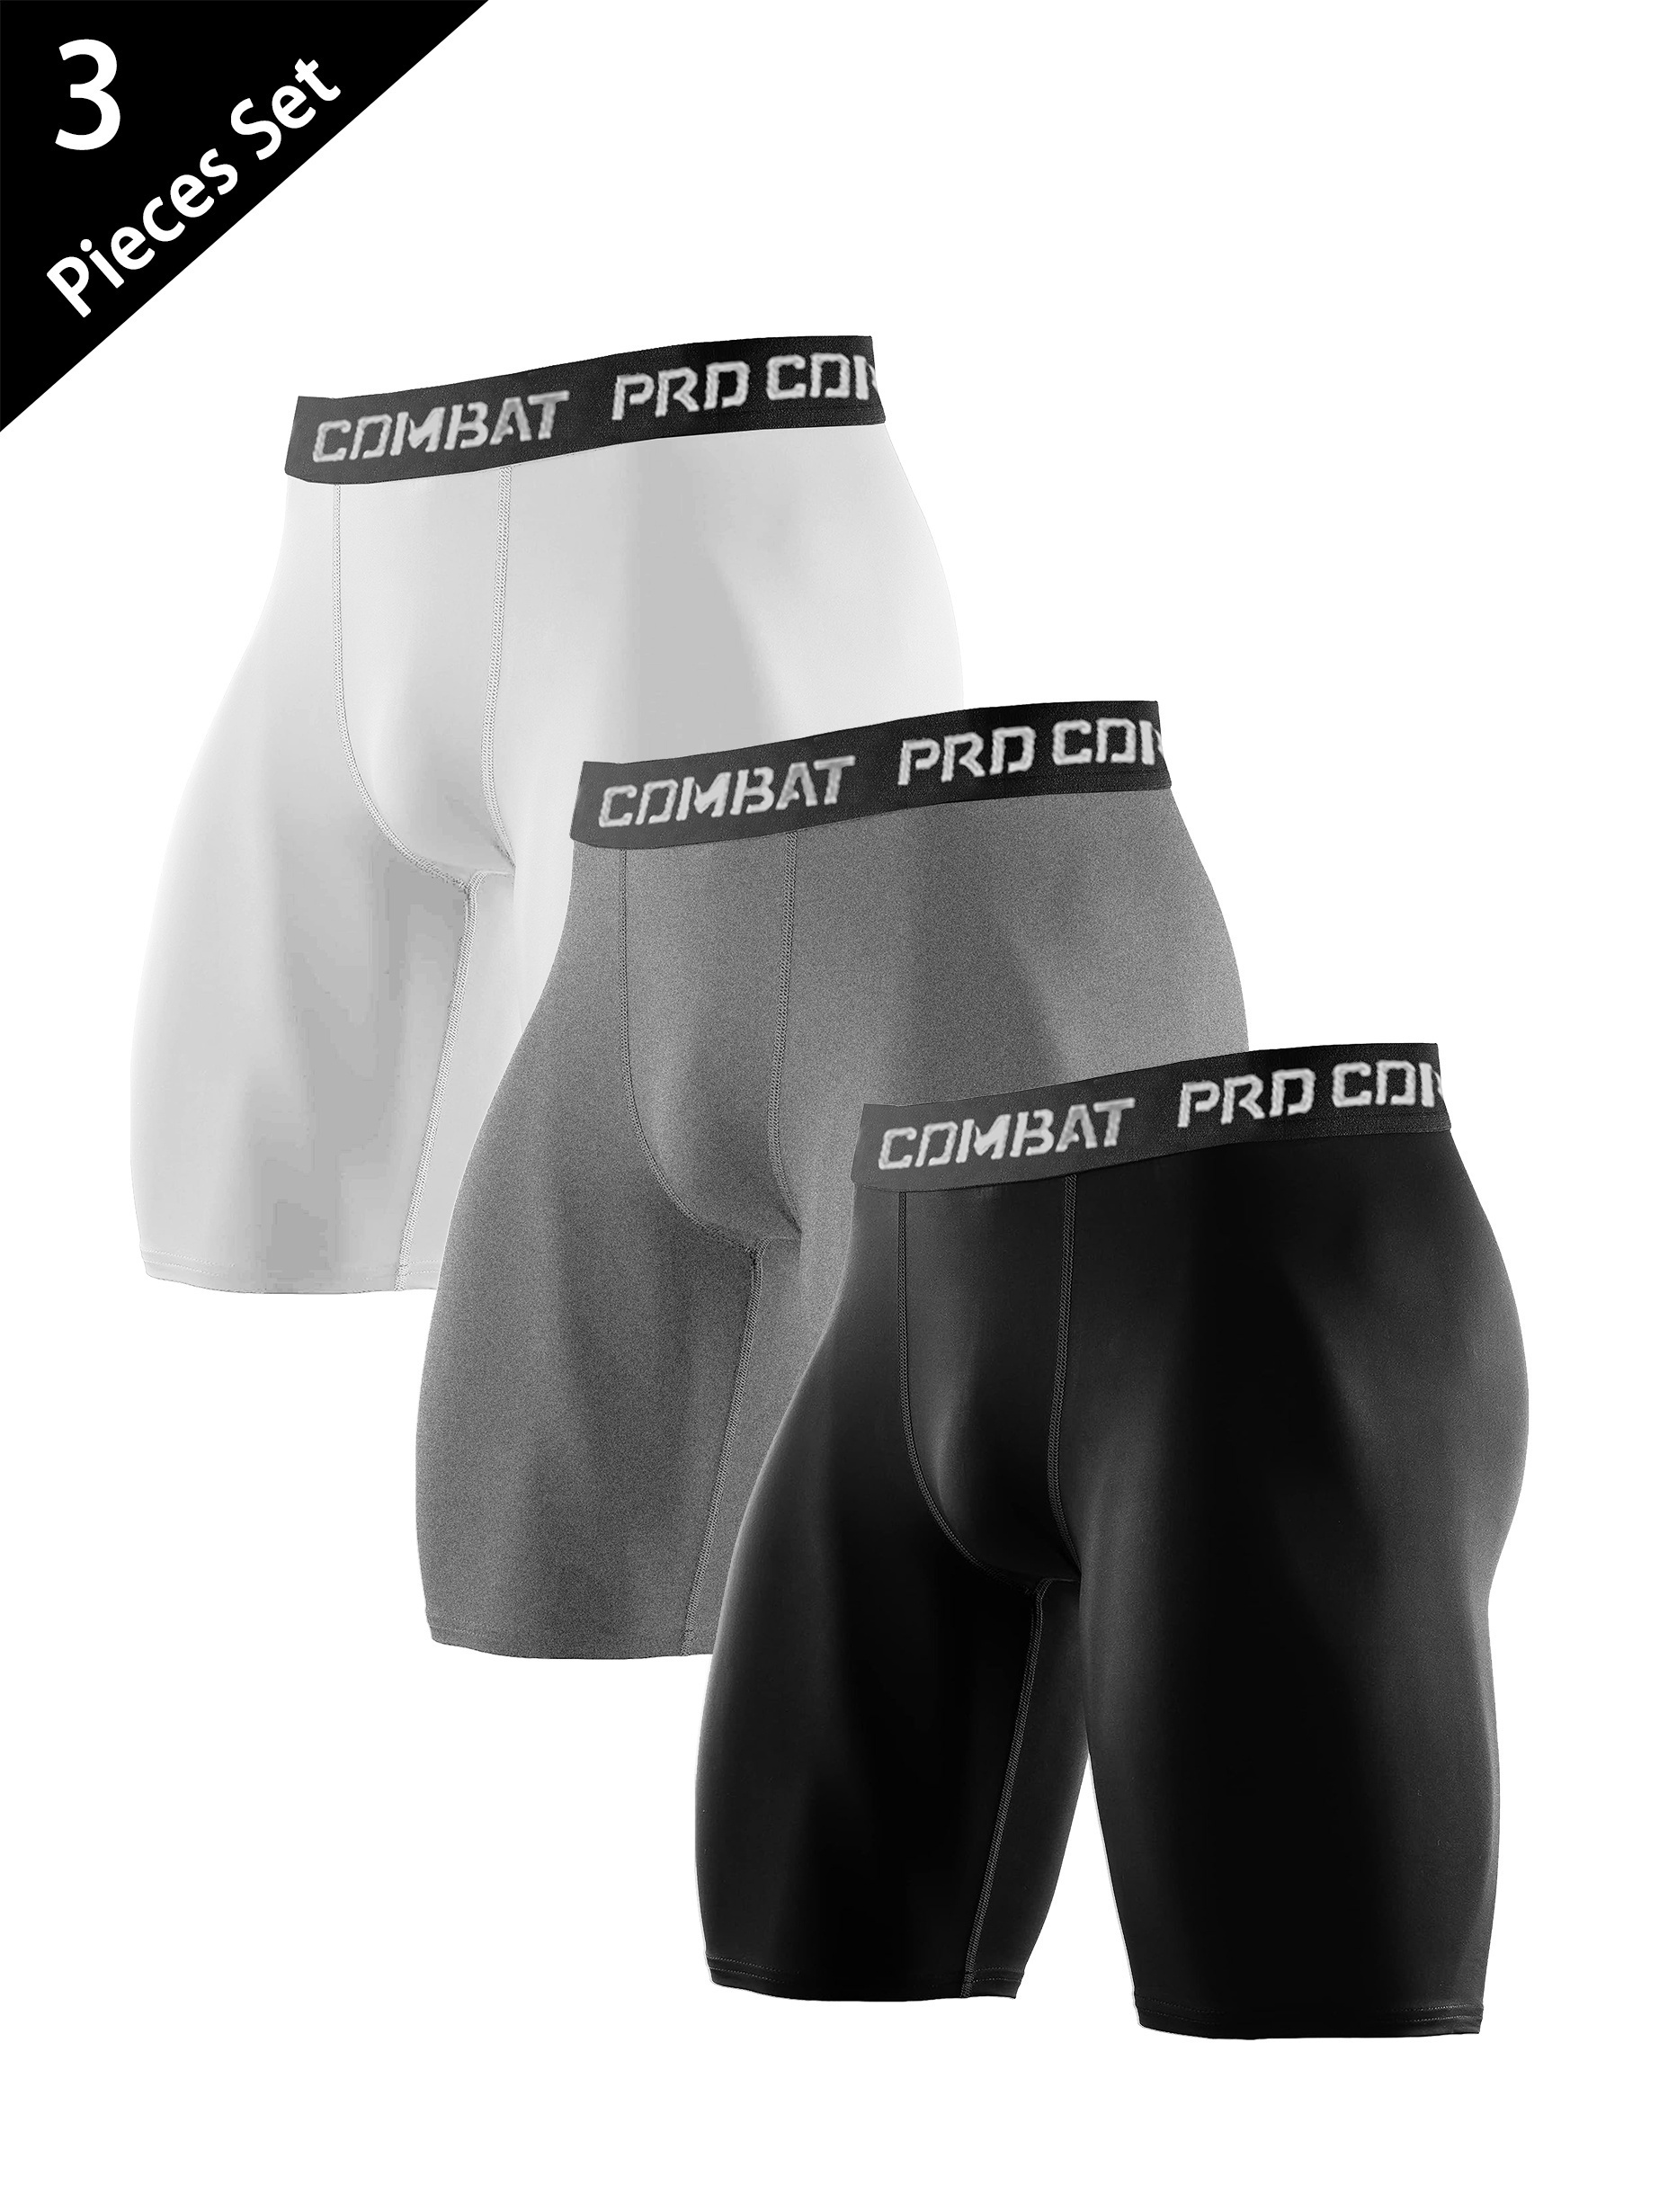 Compression shorts as underwear